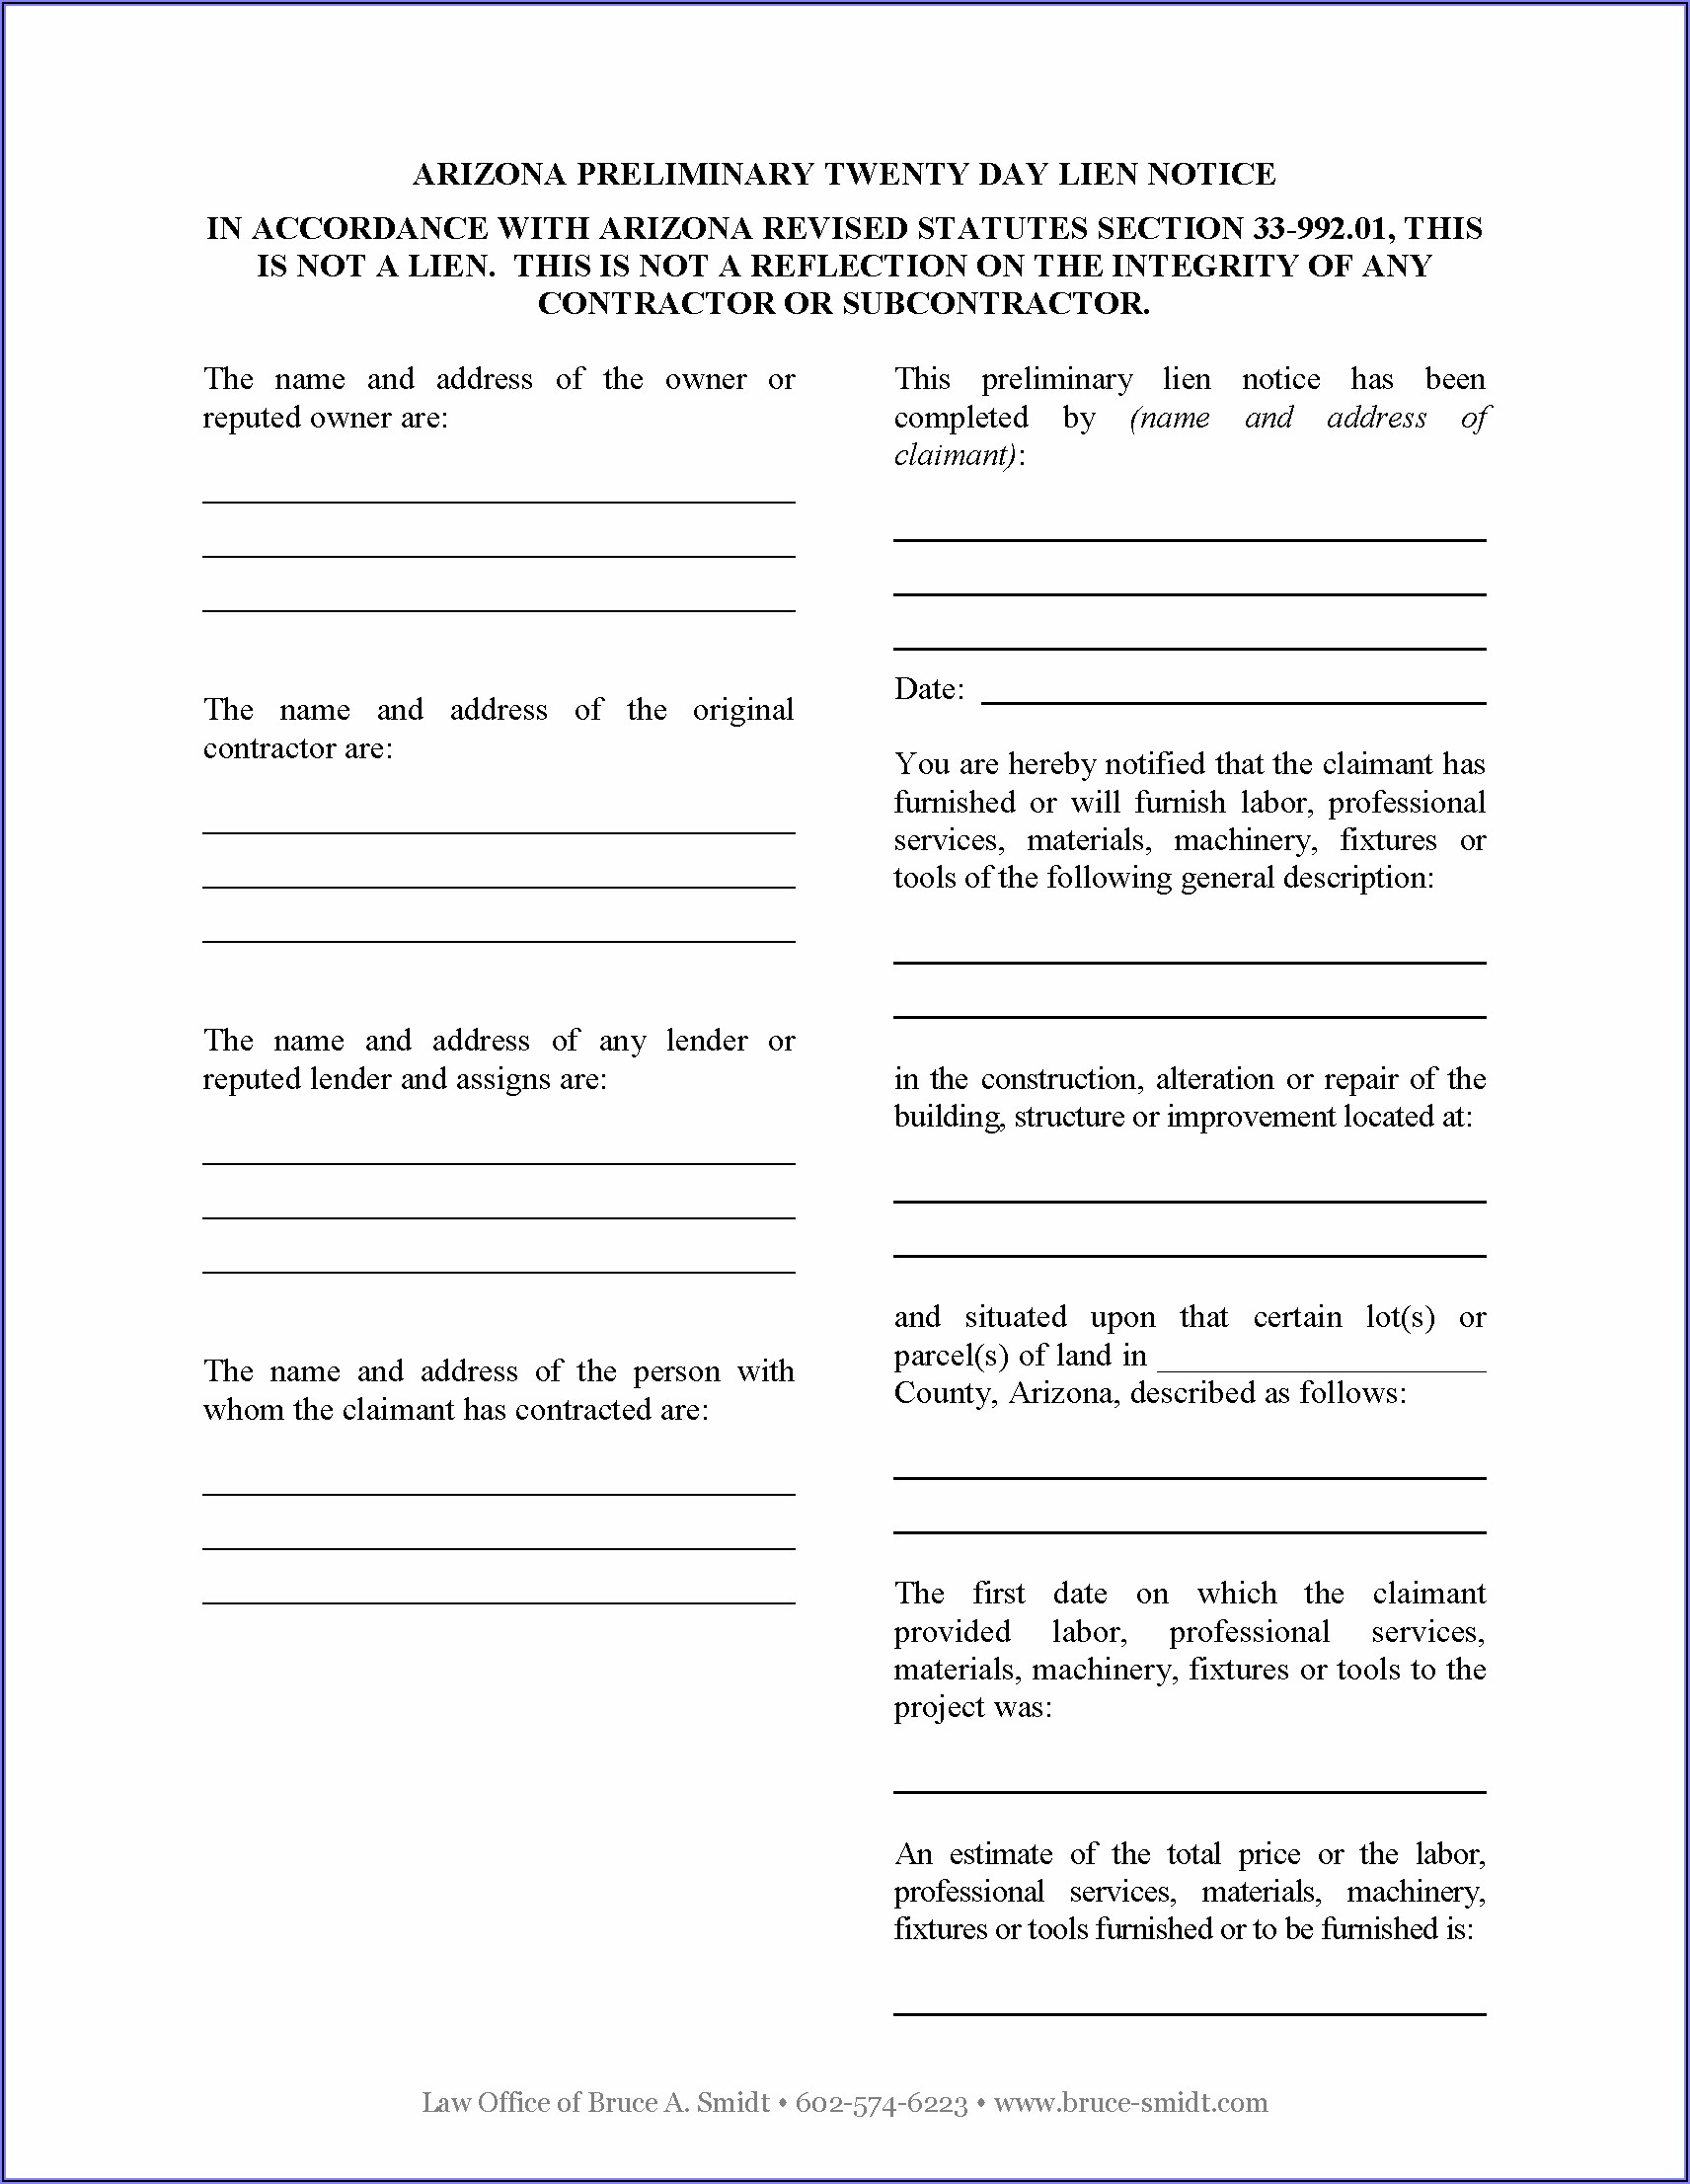 Arizona 20 Day Preliminary Notice Form